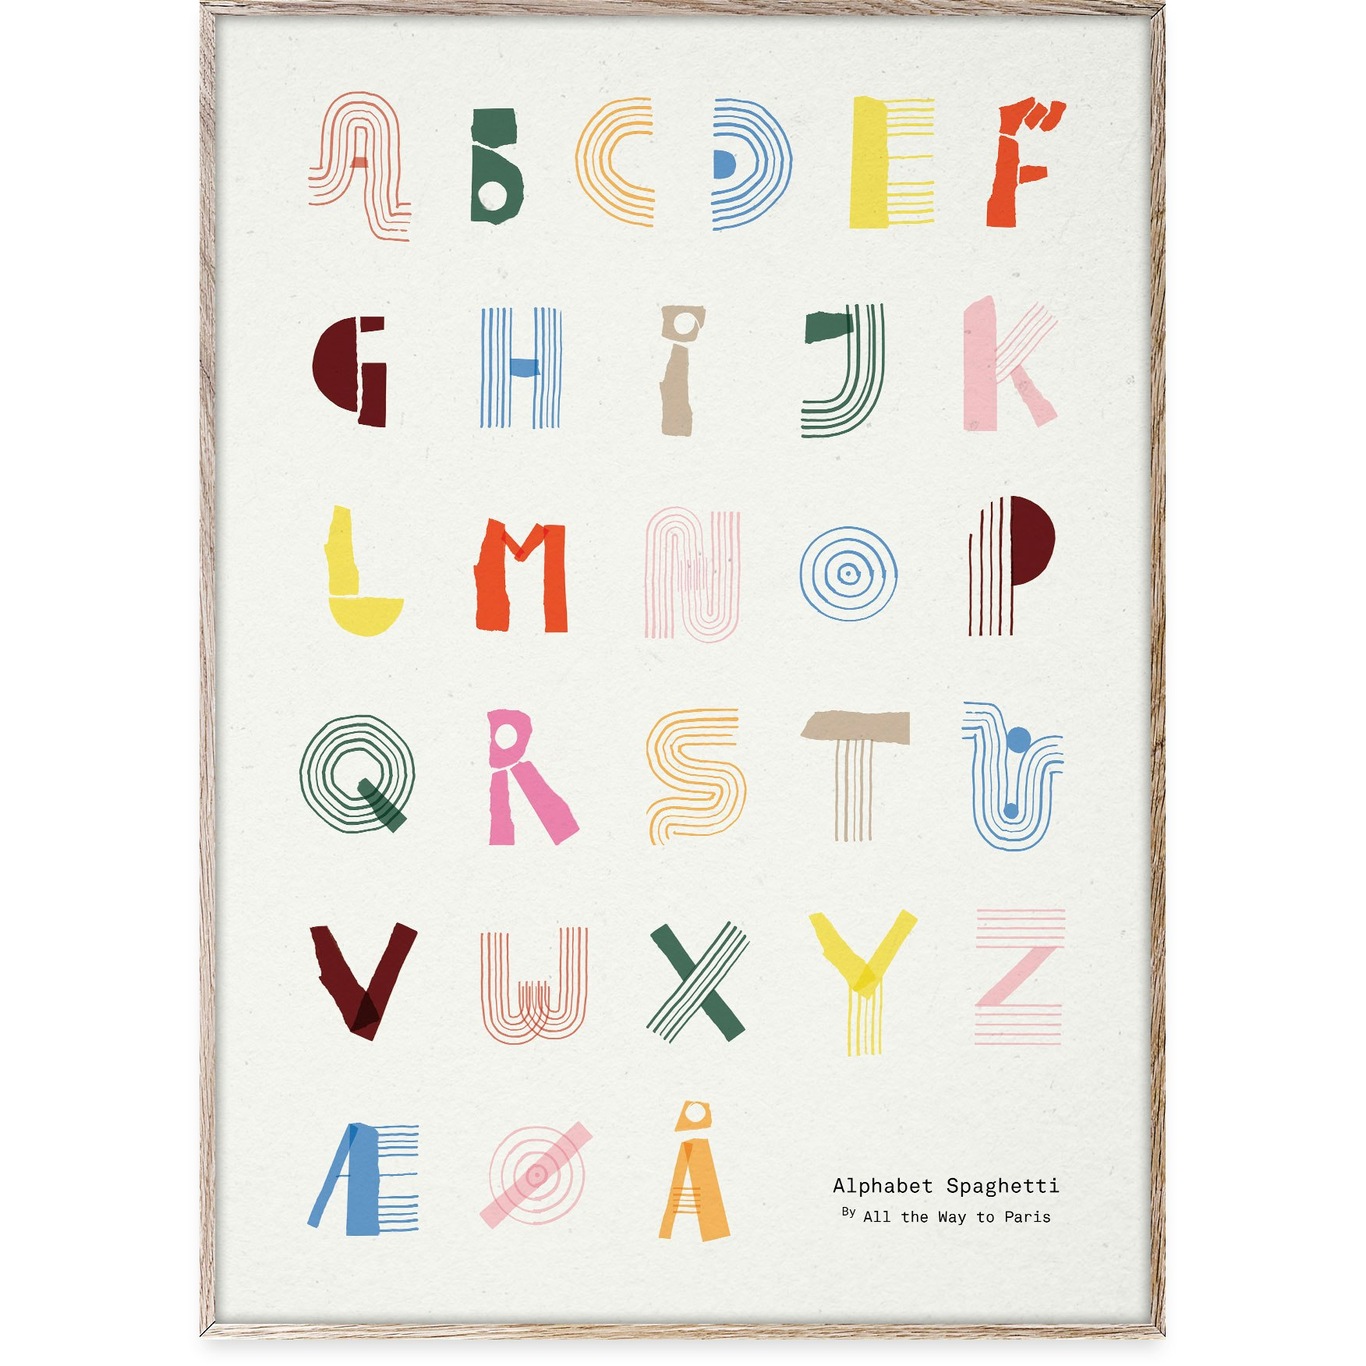 Alphabet Spaghetti DK Poster, 70x100 cm